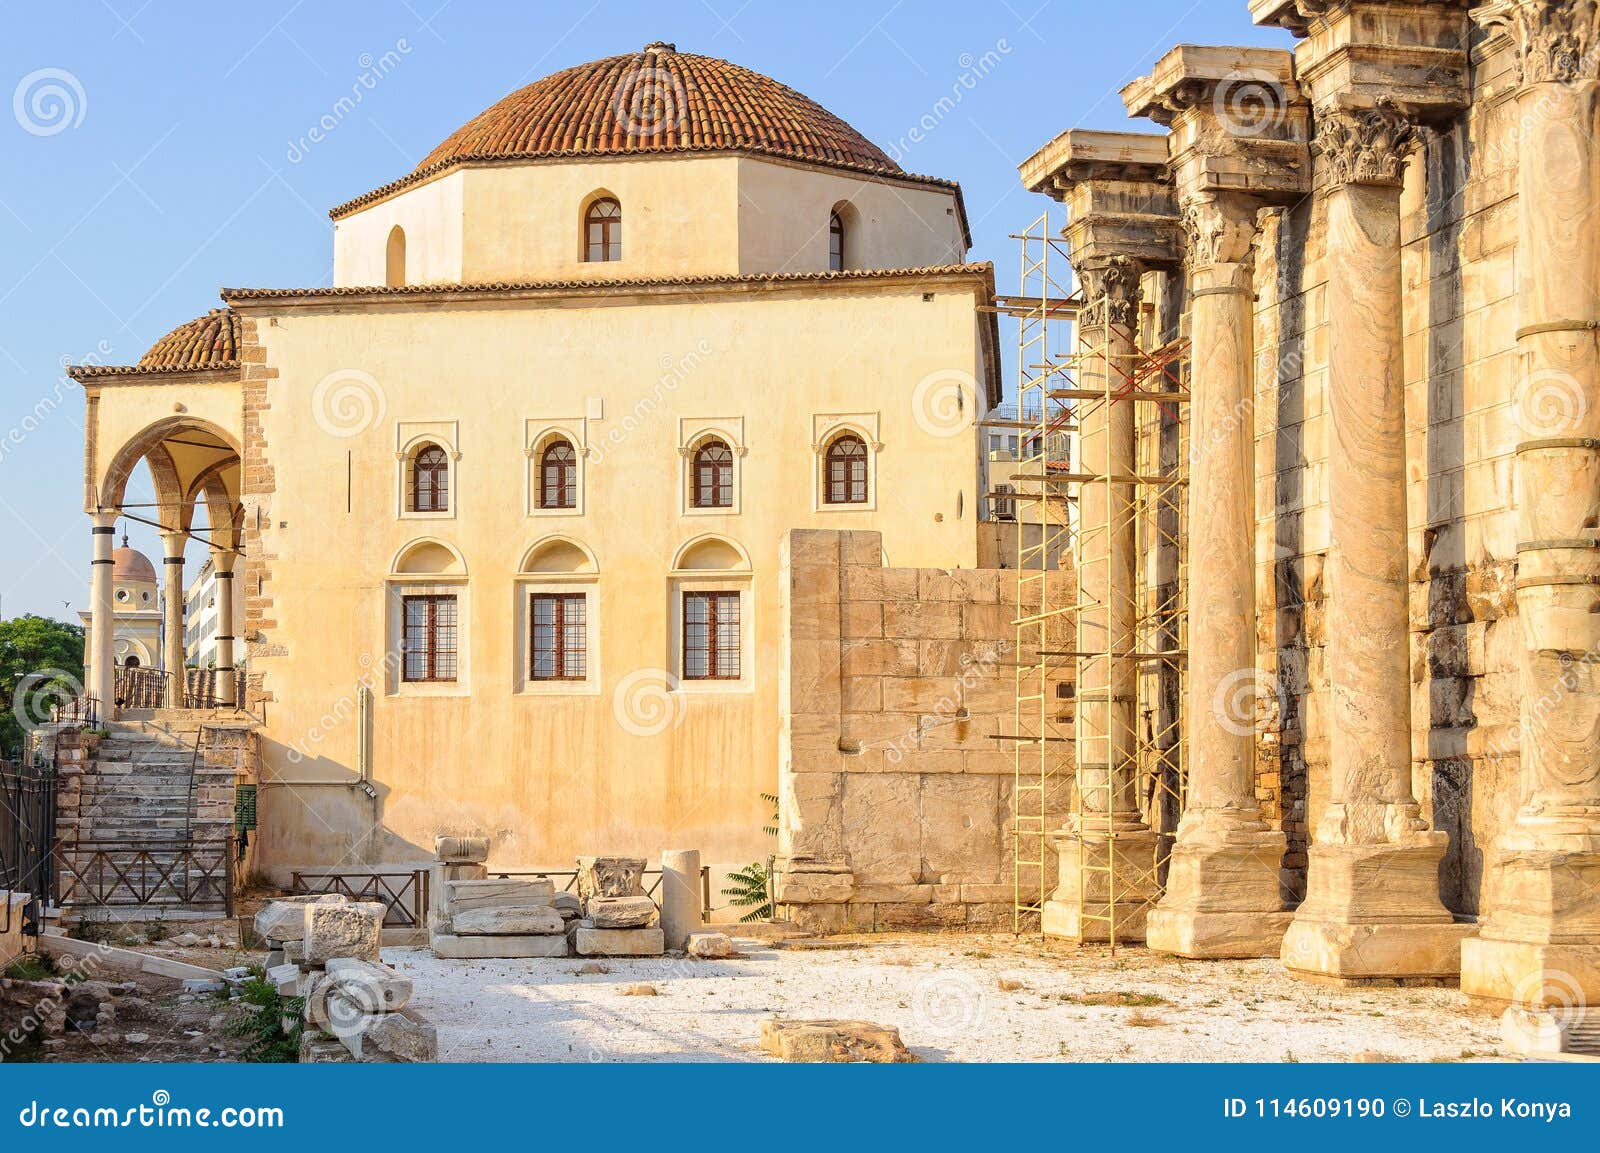 tzistarakis mosque and hadrian's library - athens